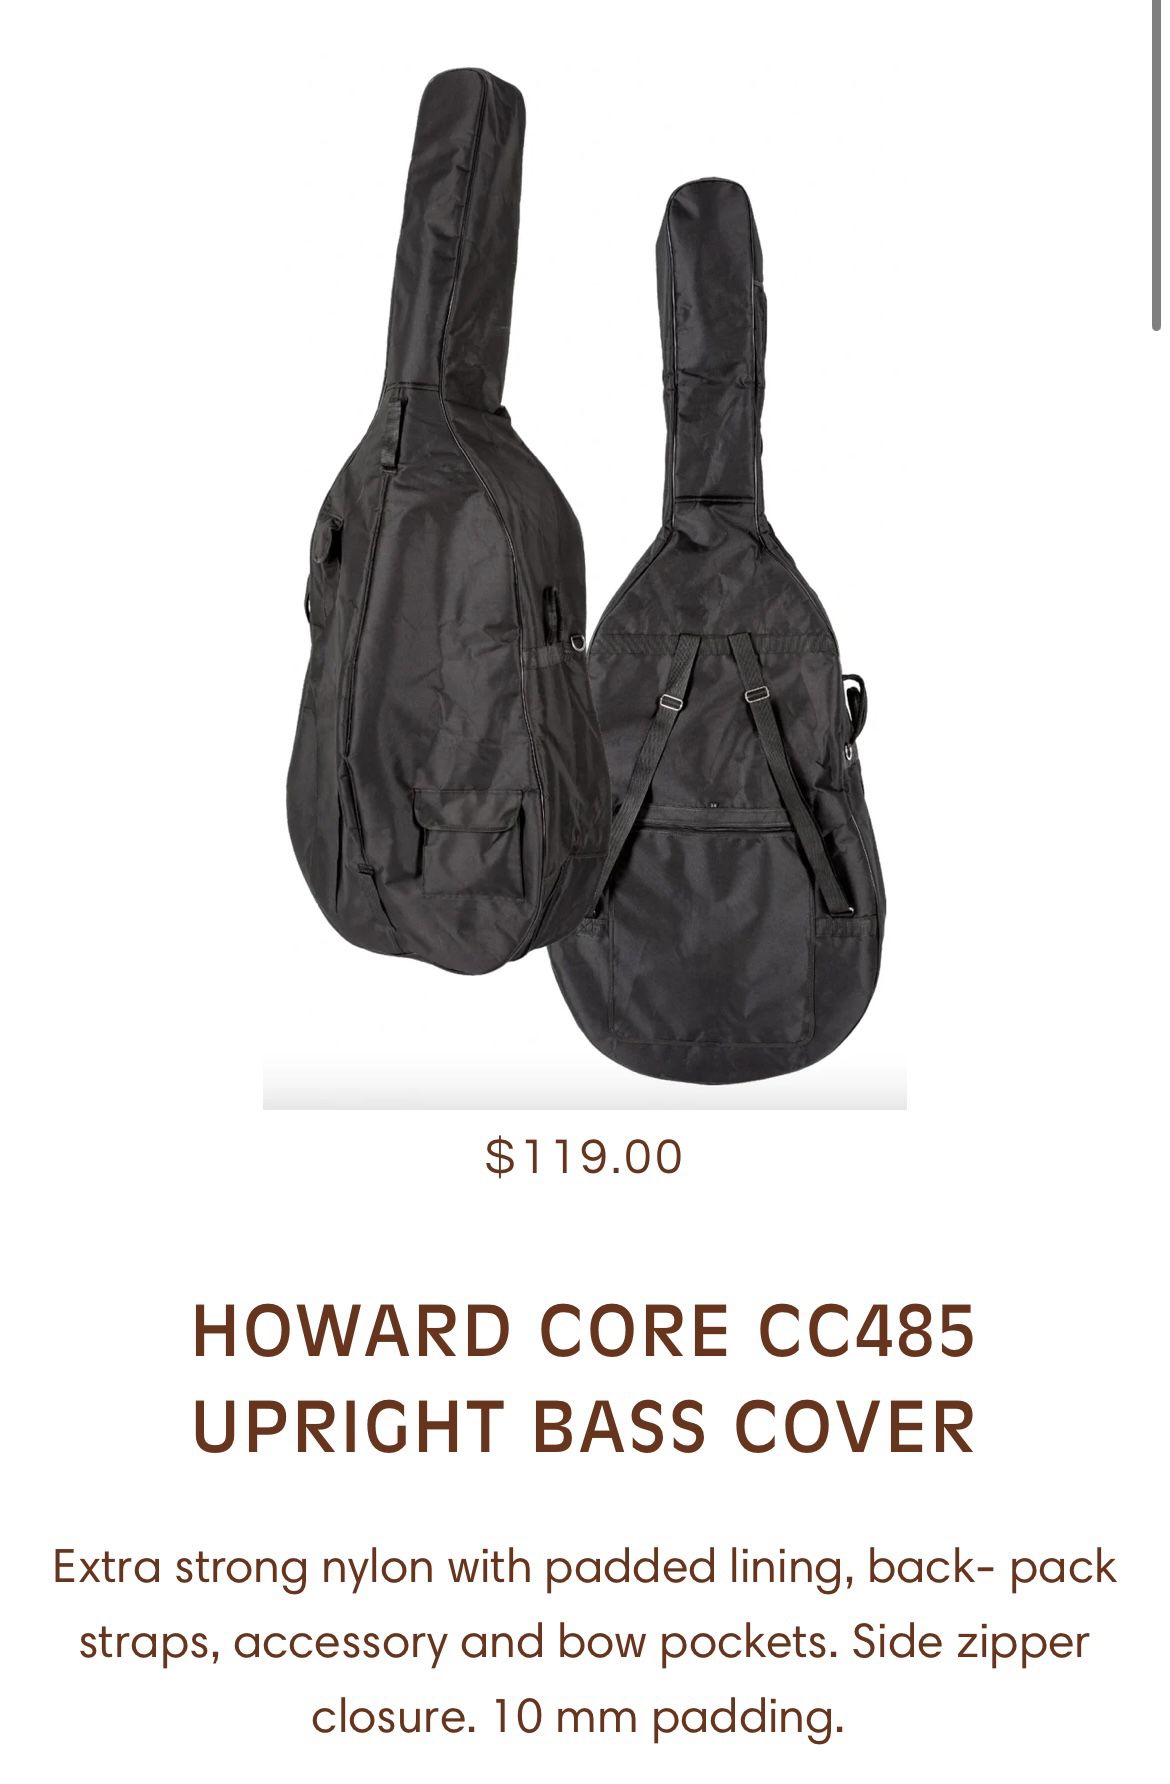 Double bass case $40